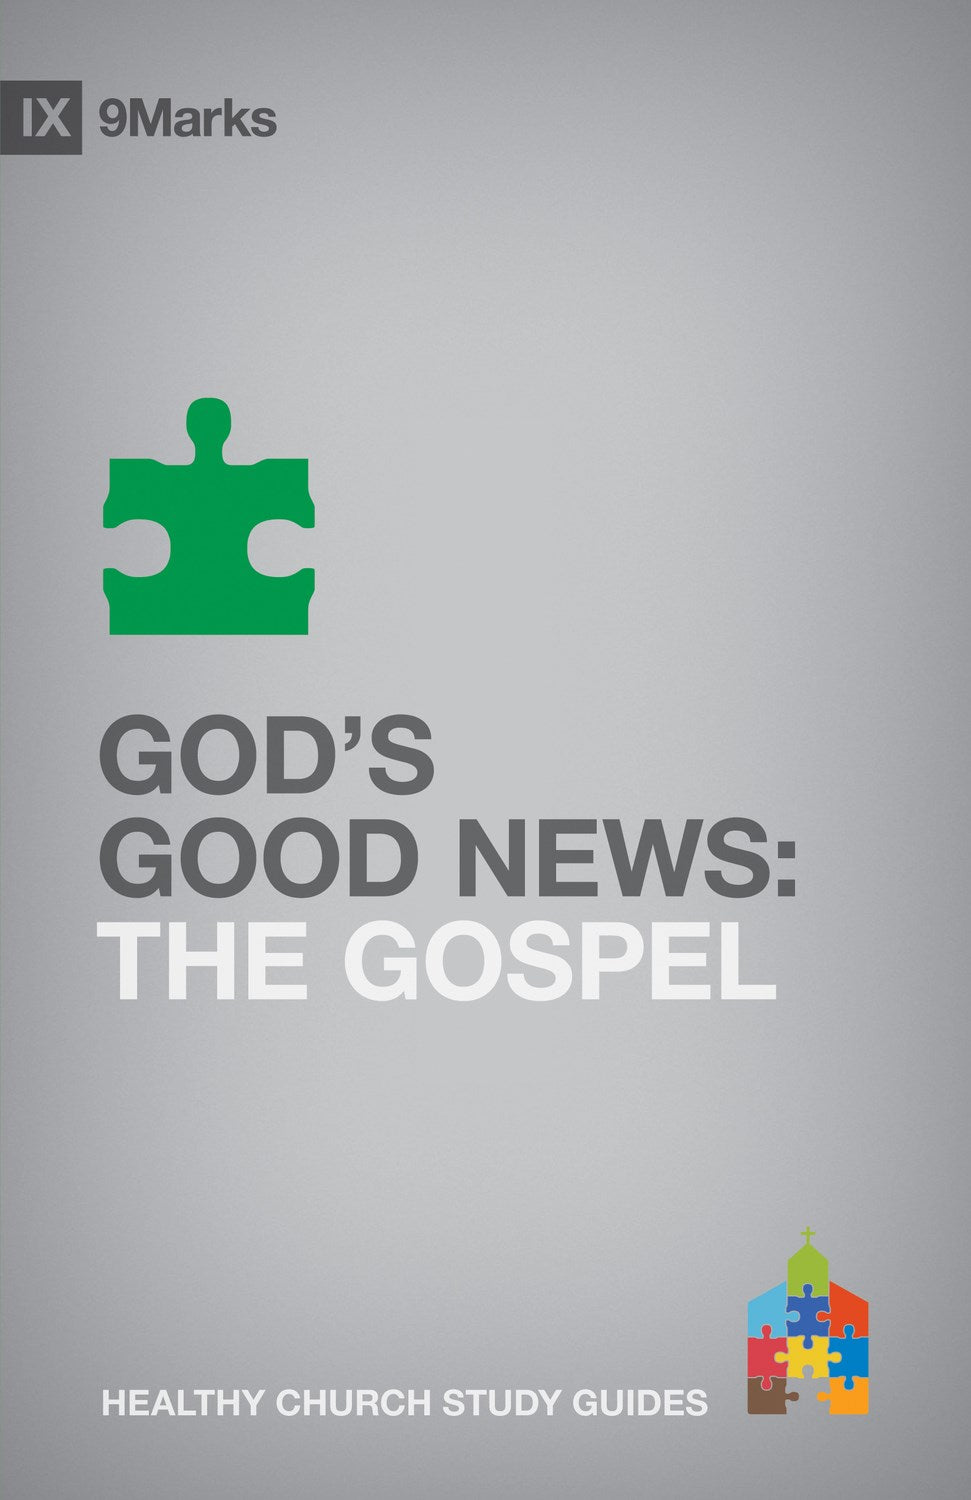 God's Good News: The Gospel (9Marks Healthy Church Study Guides)